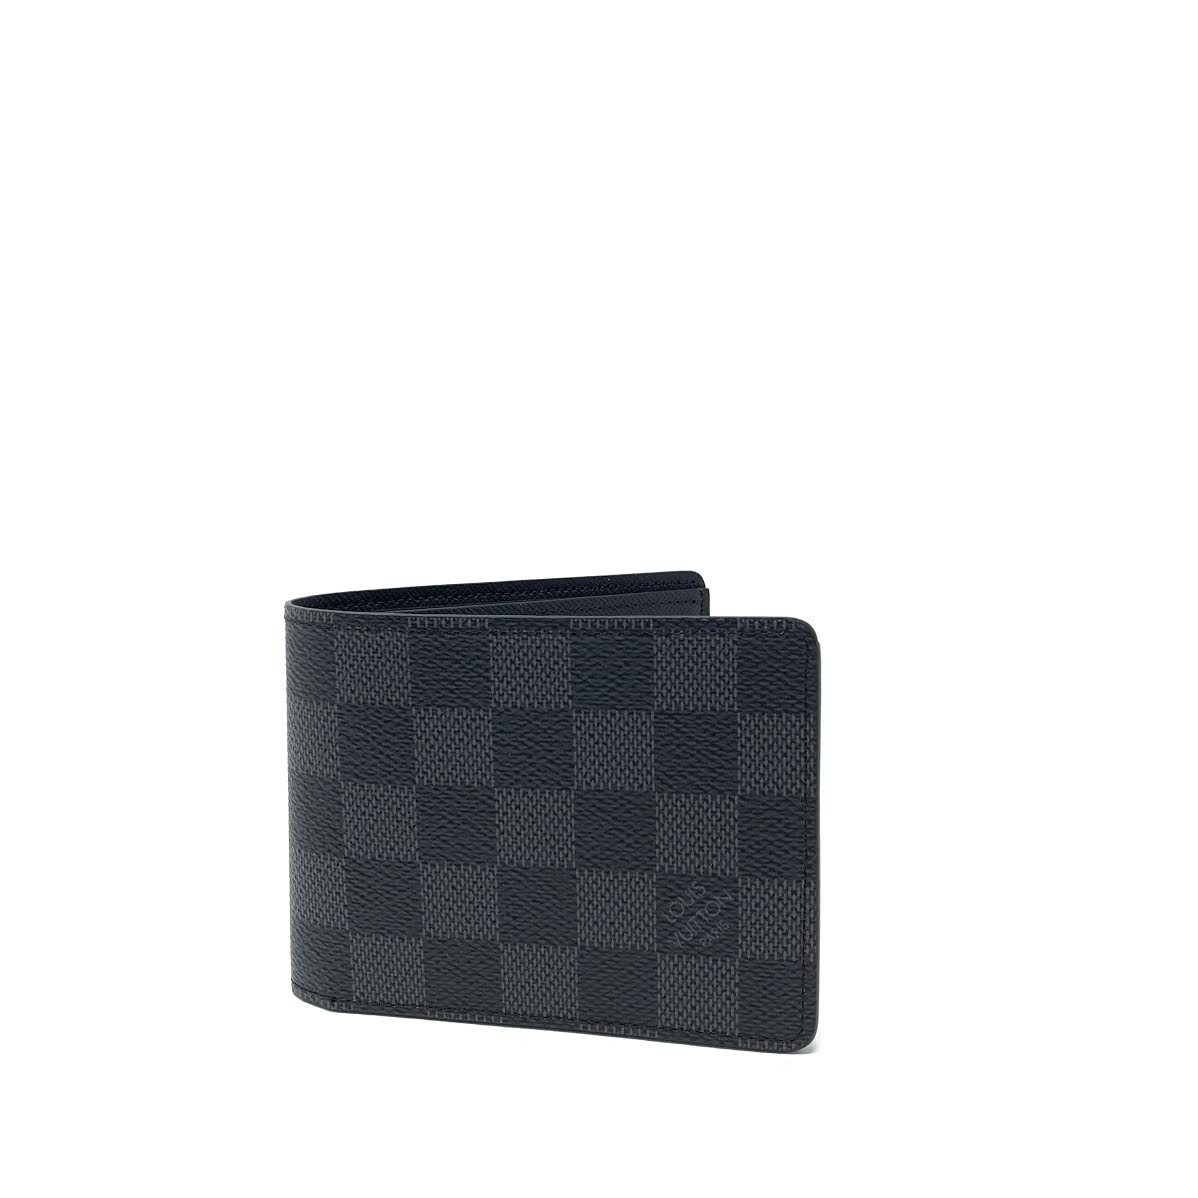 lv graphite wallet